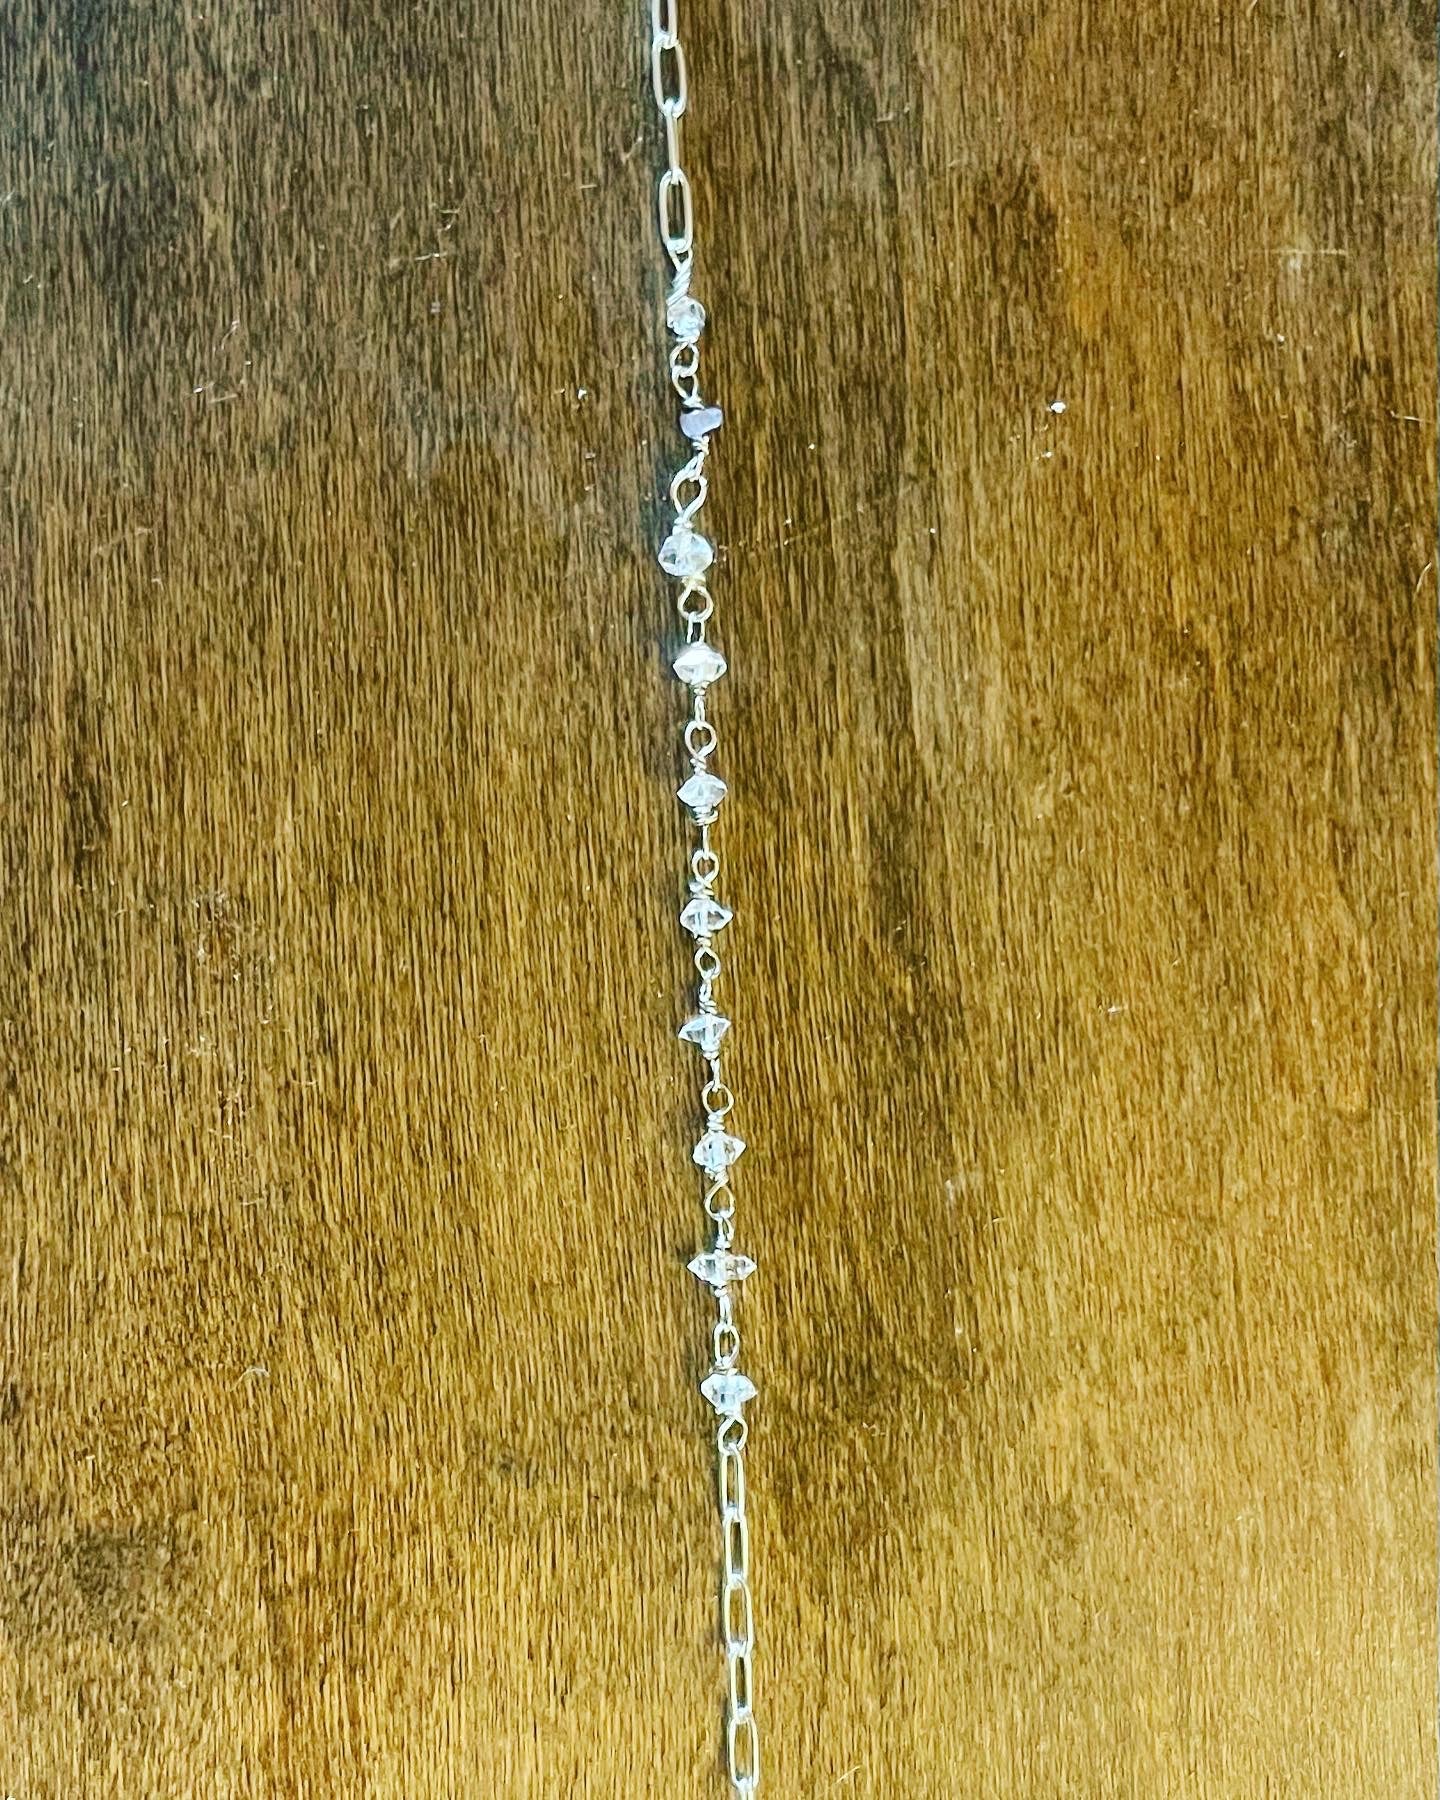 Herkimer diamond paperclip chain